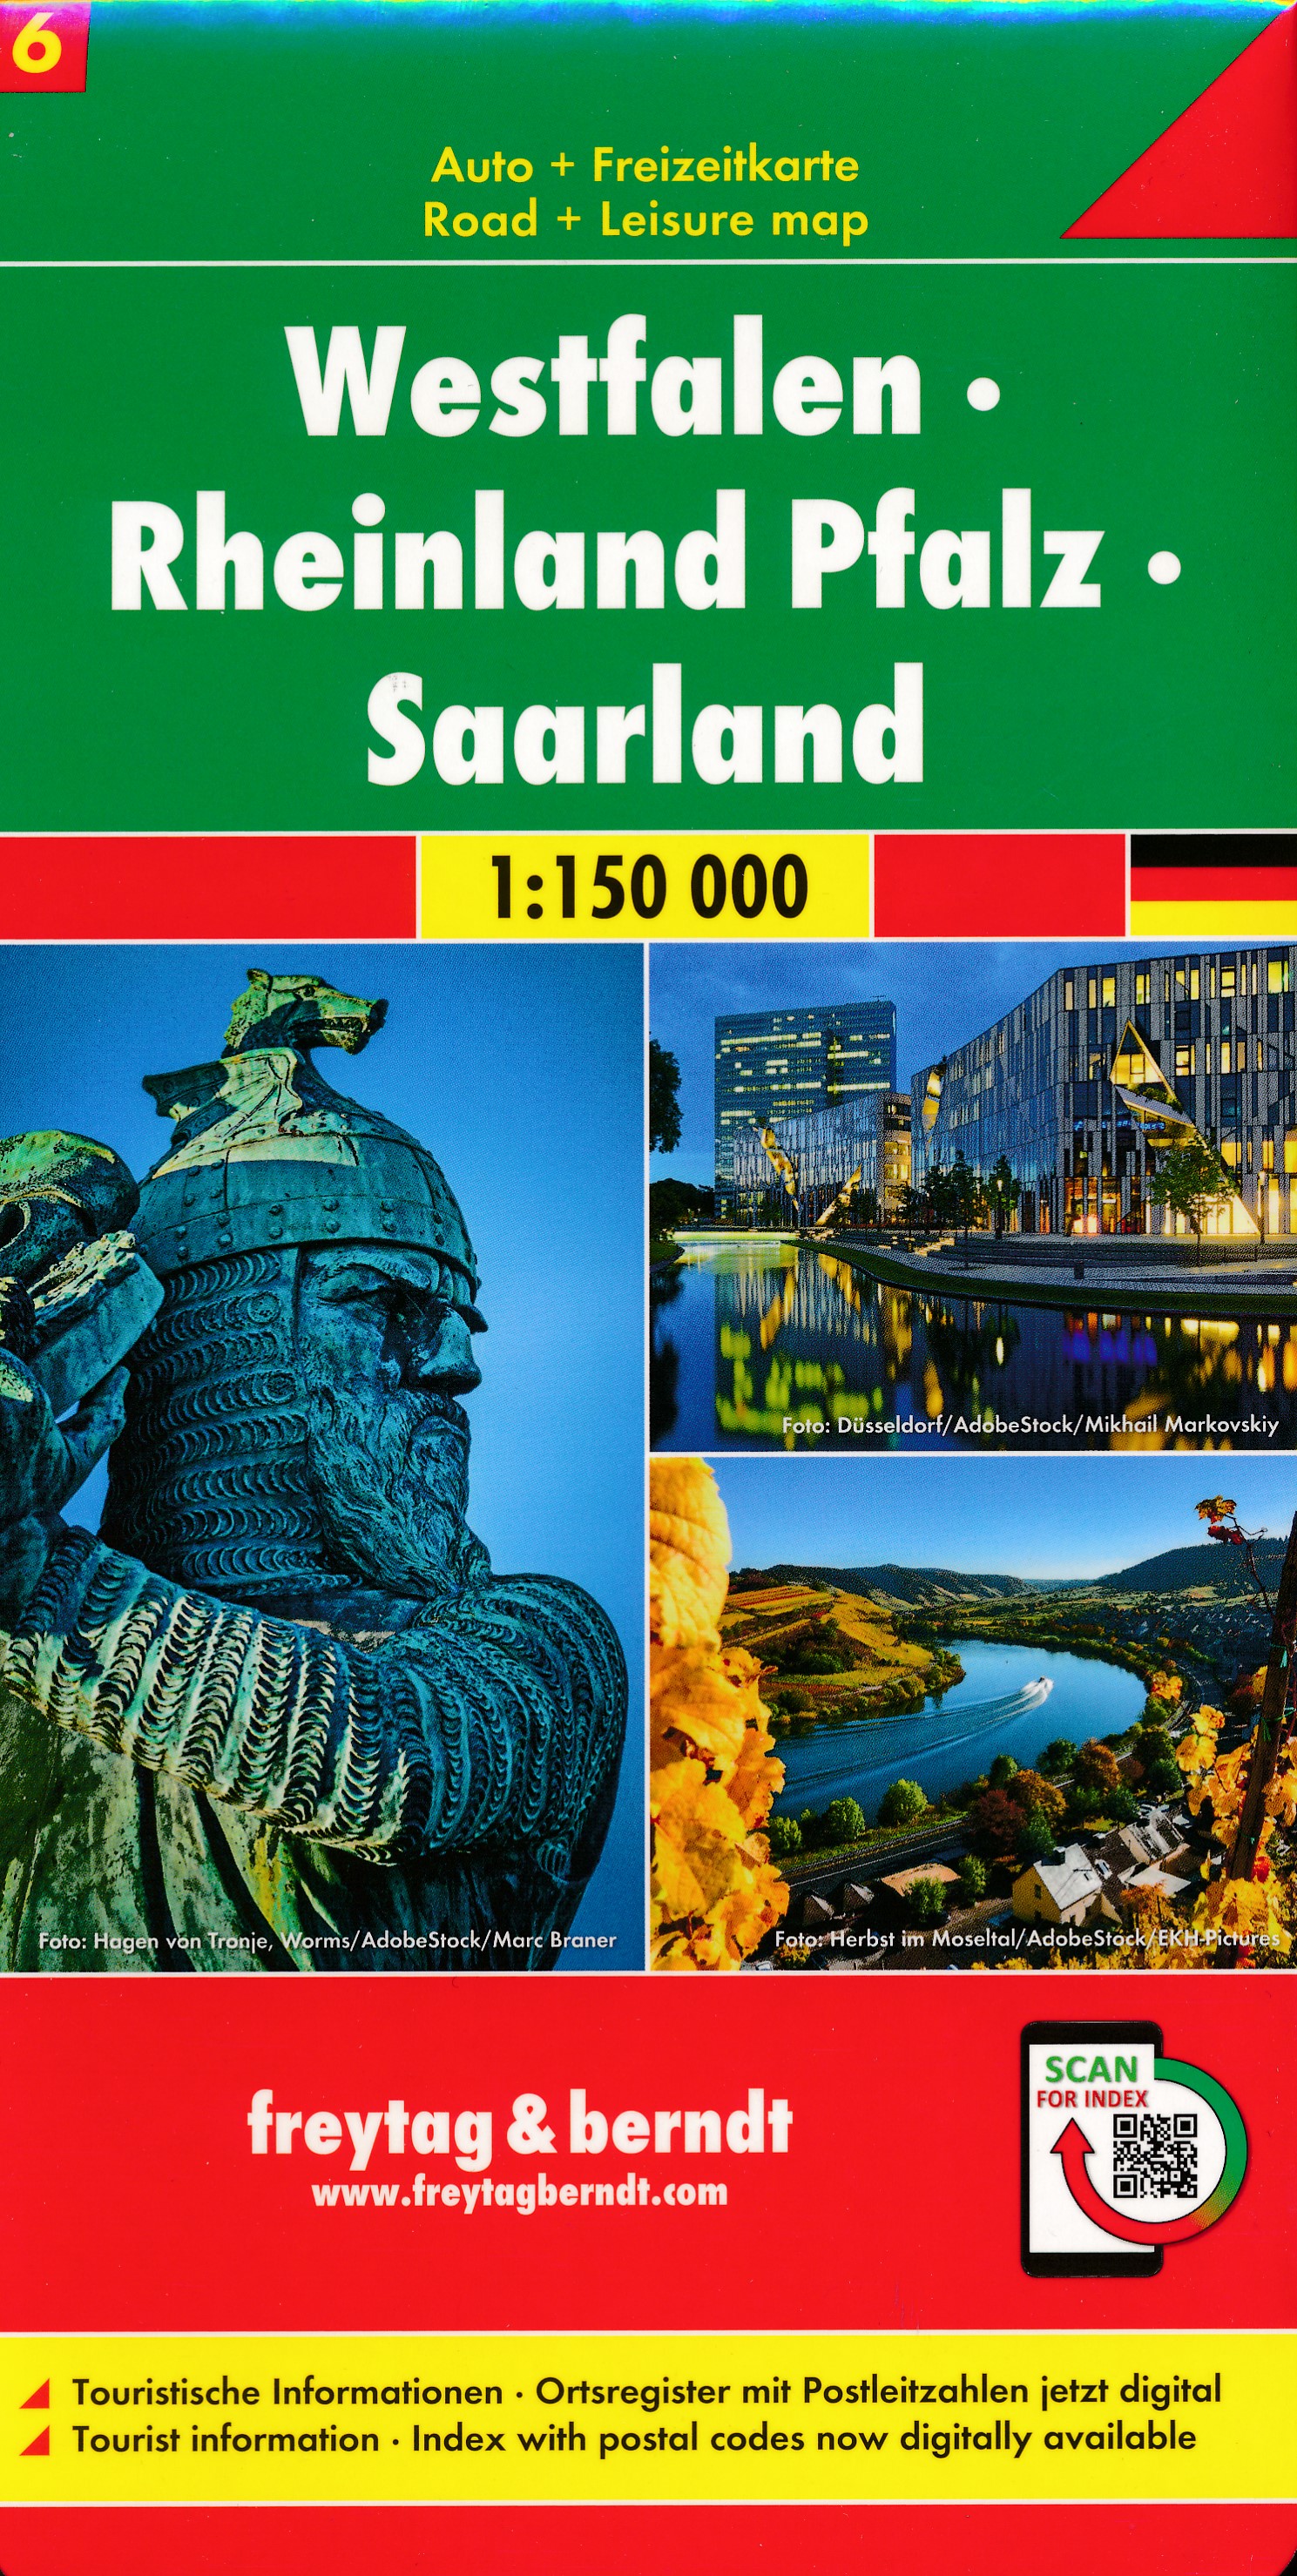 Online bestellen: Wegenkaart - landkaart 06 Westfalen - Rheinland Pfalz - Saarland | Freytag & Berndt